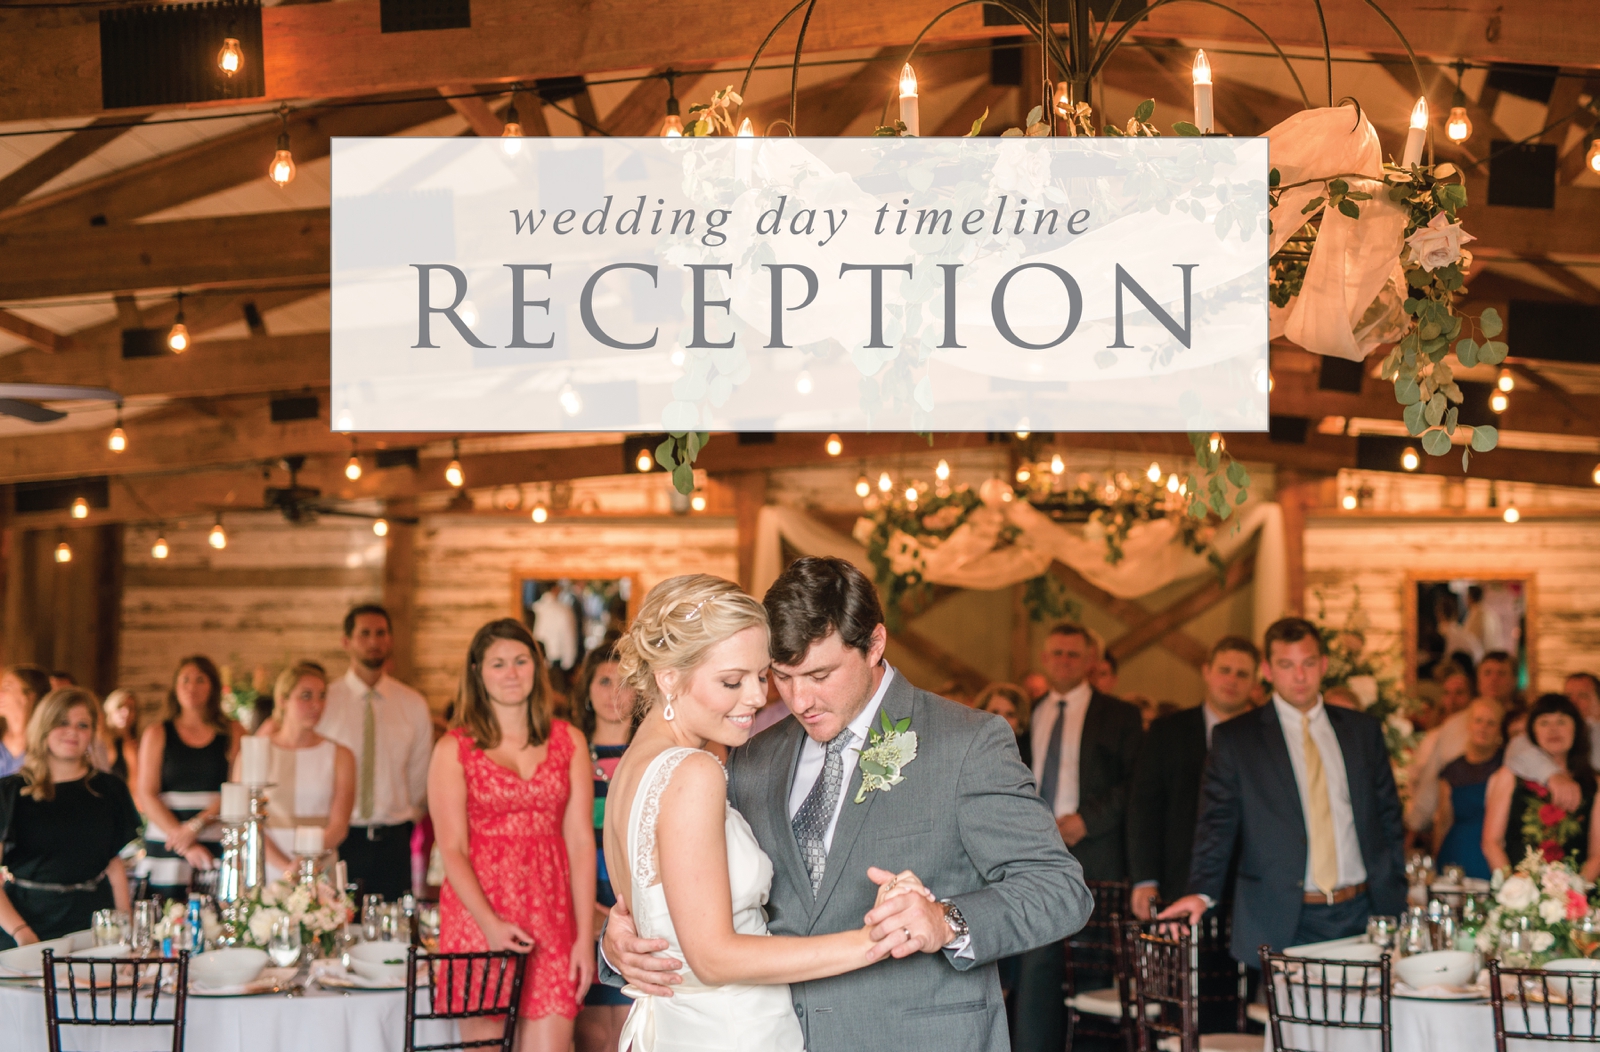 wedding reception timeline planning tips | virginia wedding photographer